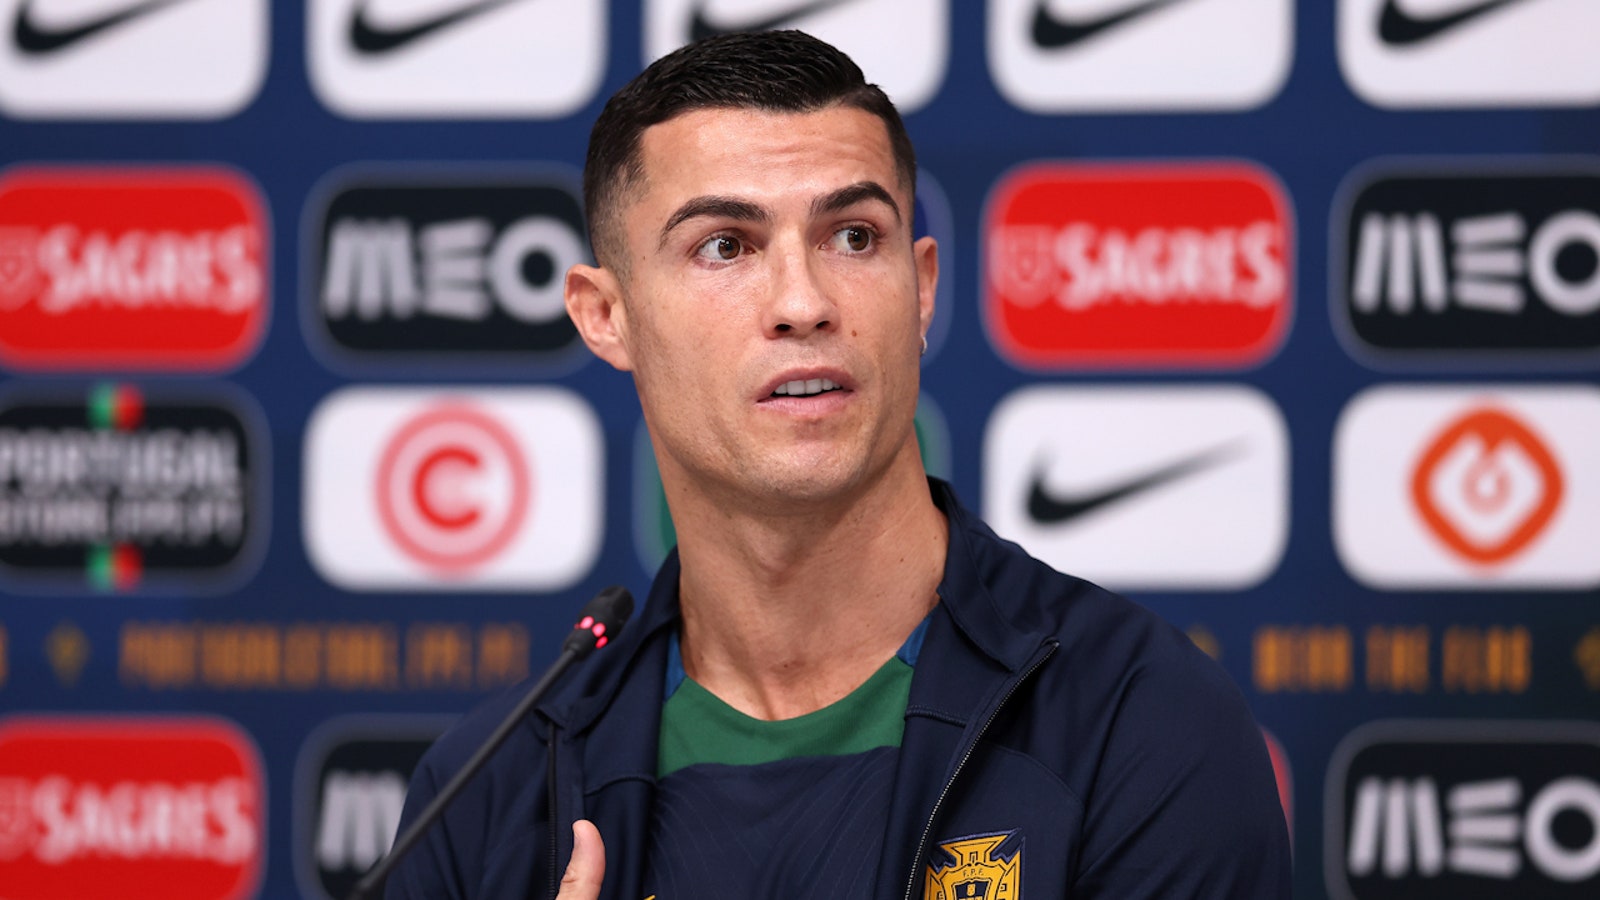 Ronaldo, Manchester United agree to part ways